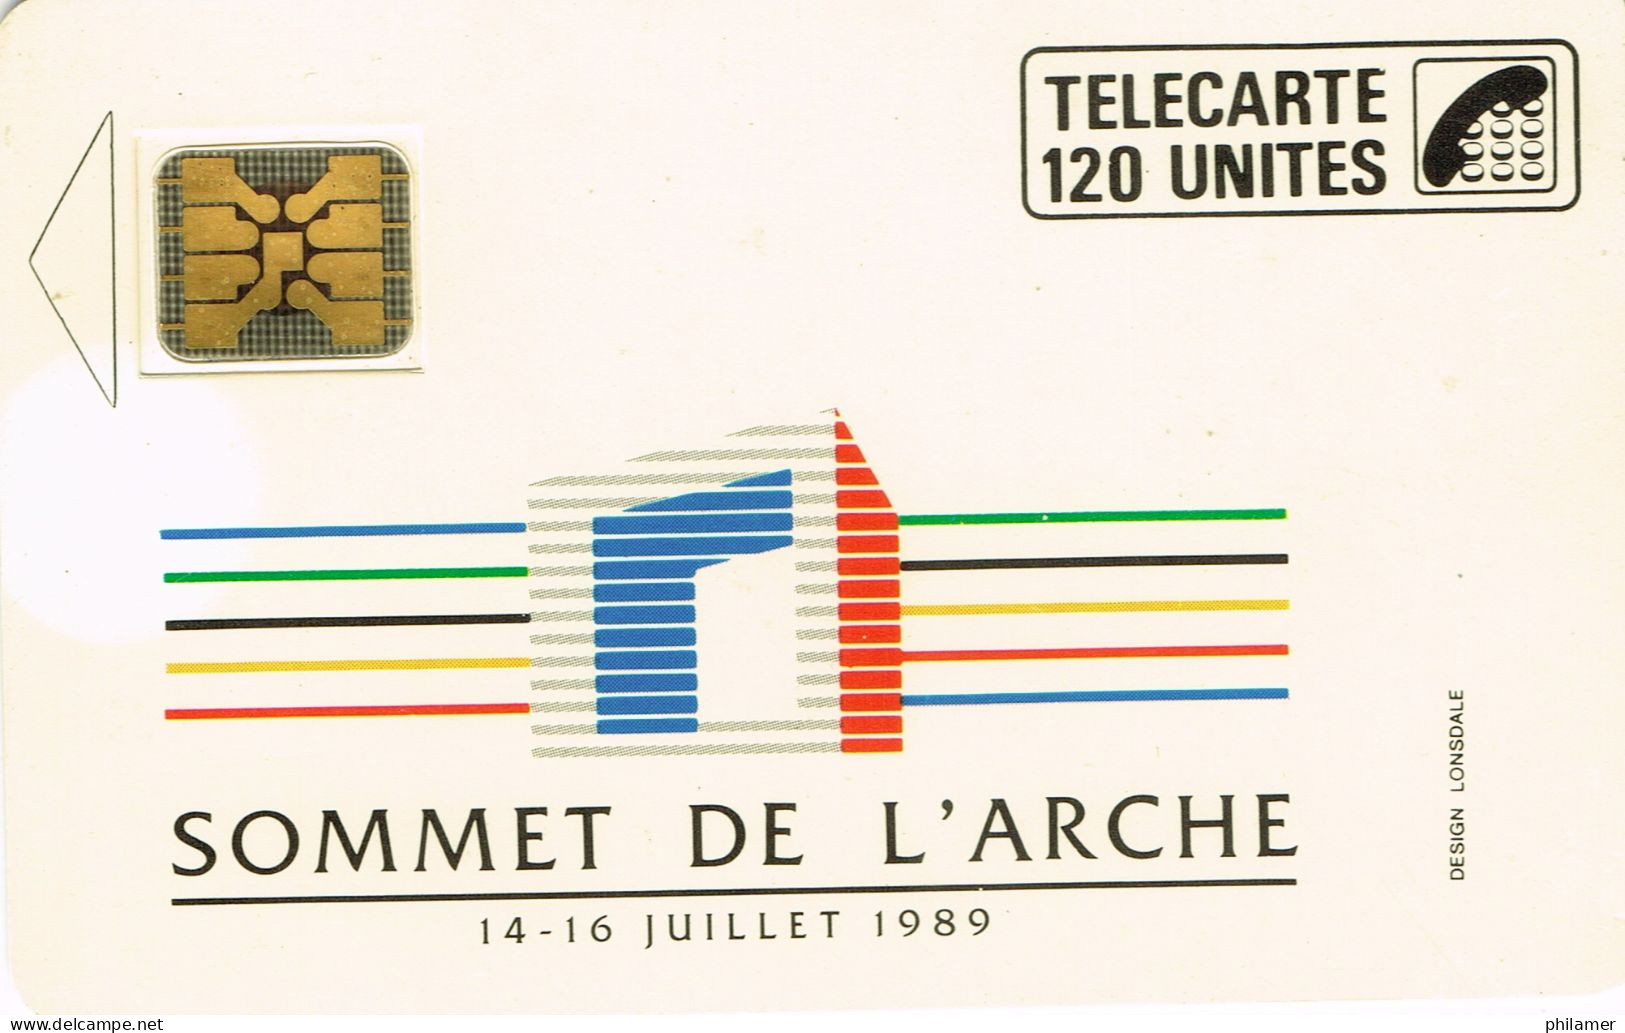 France French Telecarte Phonecard Interne C42 Sommet De L'arche 1989 France Telecom Paris UT BE - Interner Gebrauch